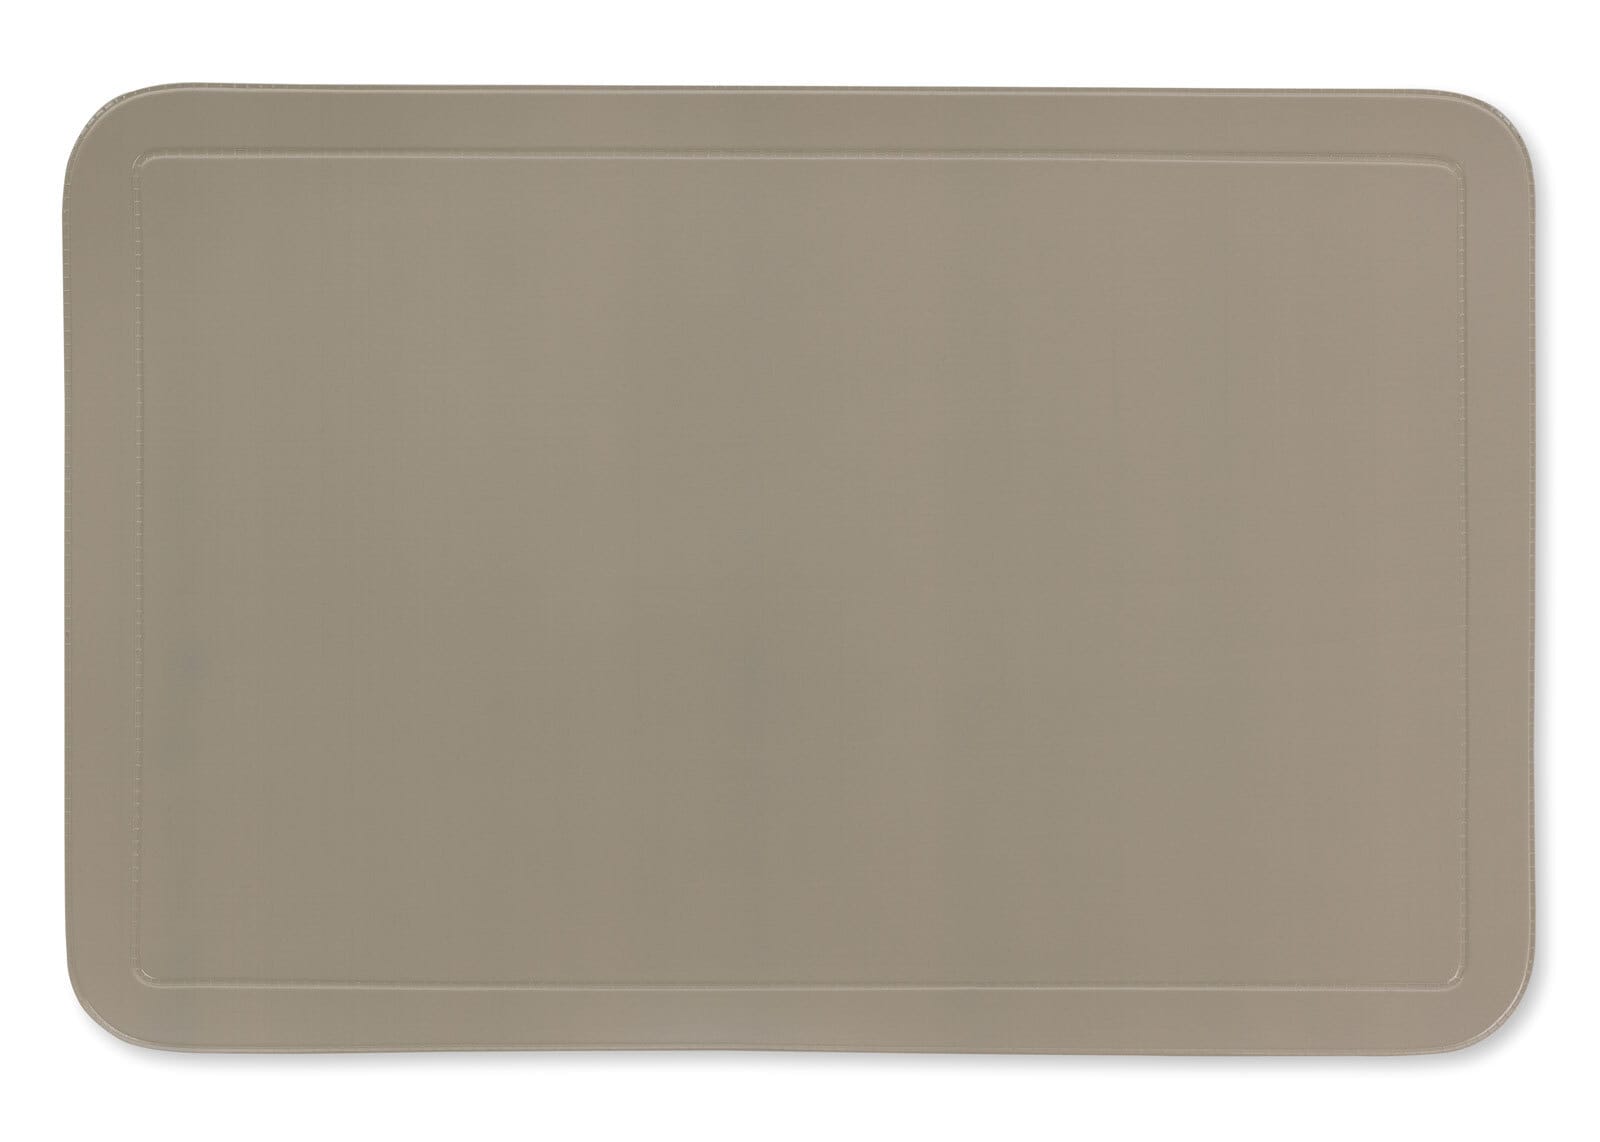 kela Tischset UNI 43,5 x 28,5 cm Kunststoff braun/grau